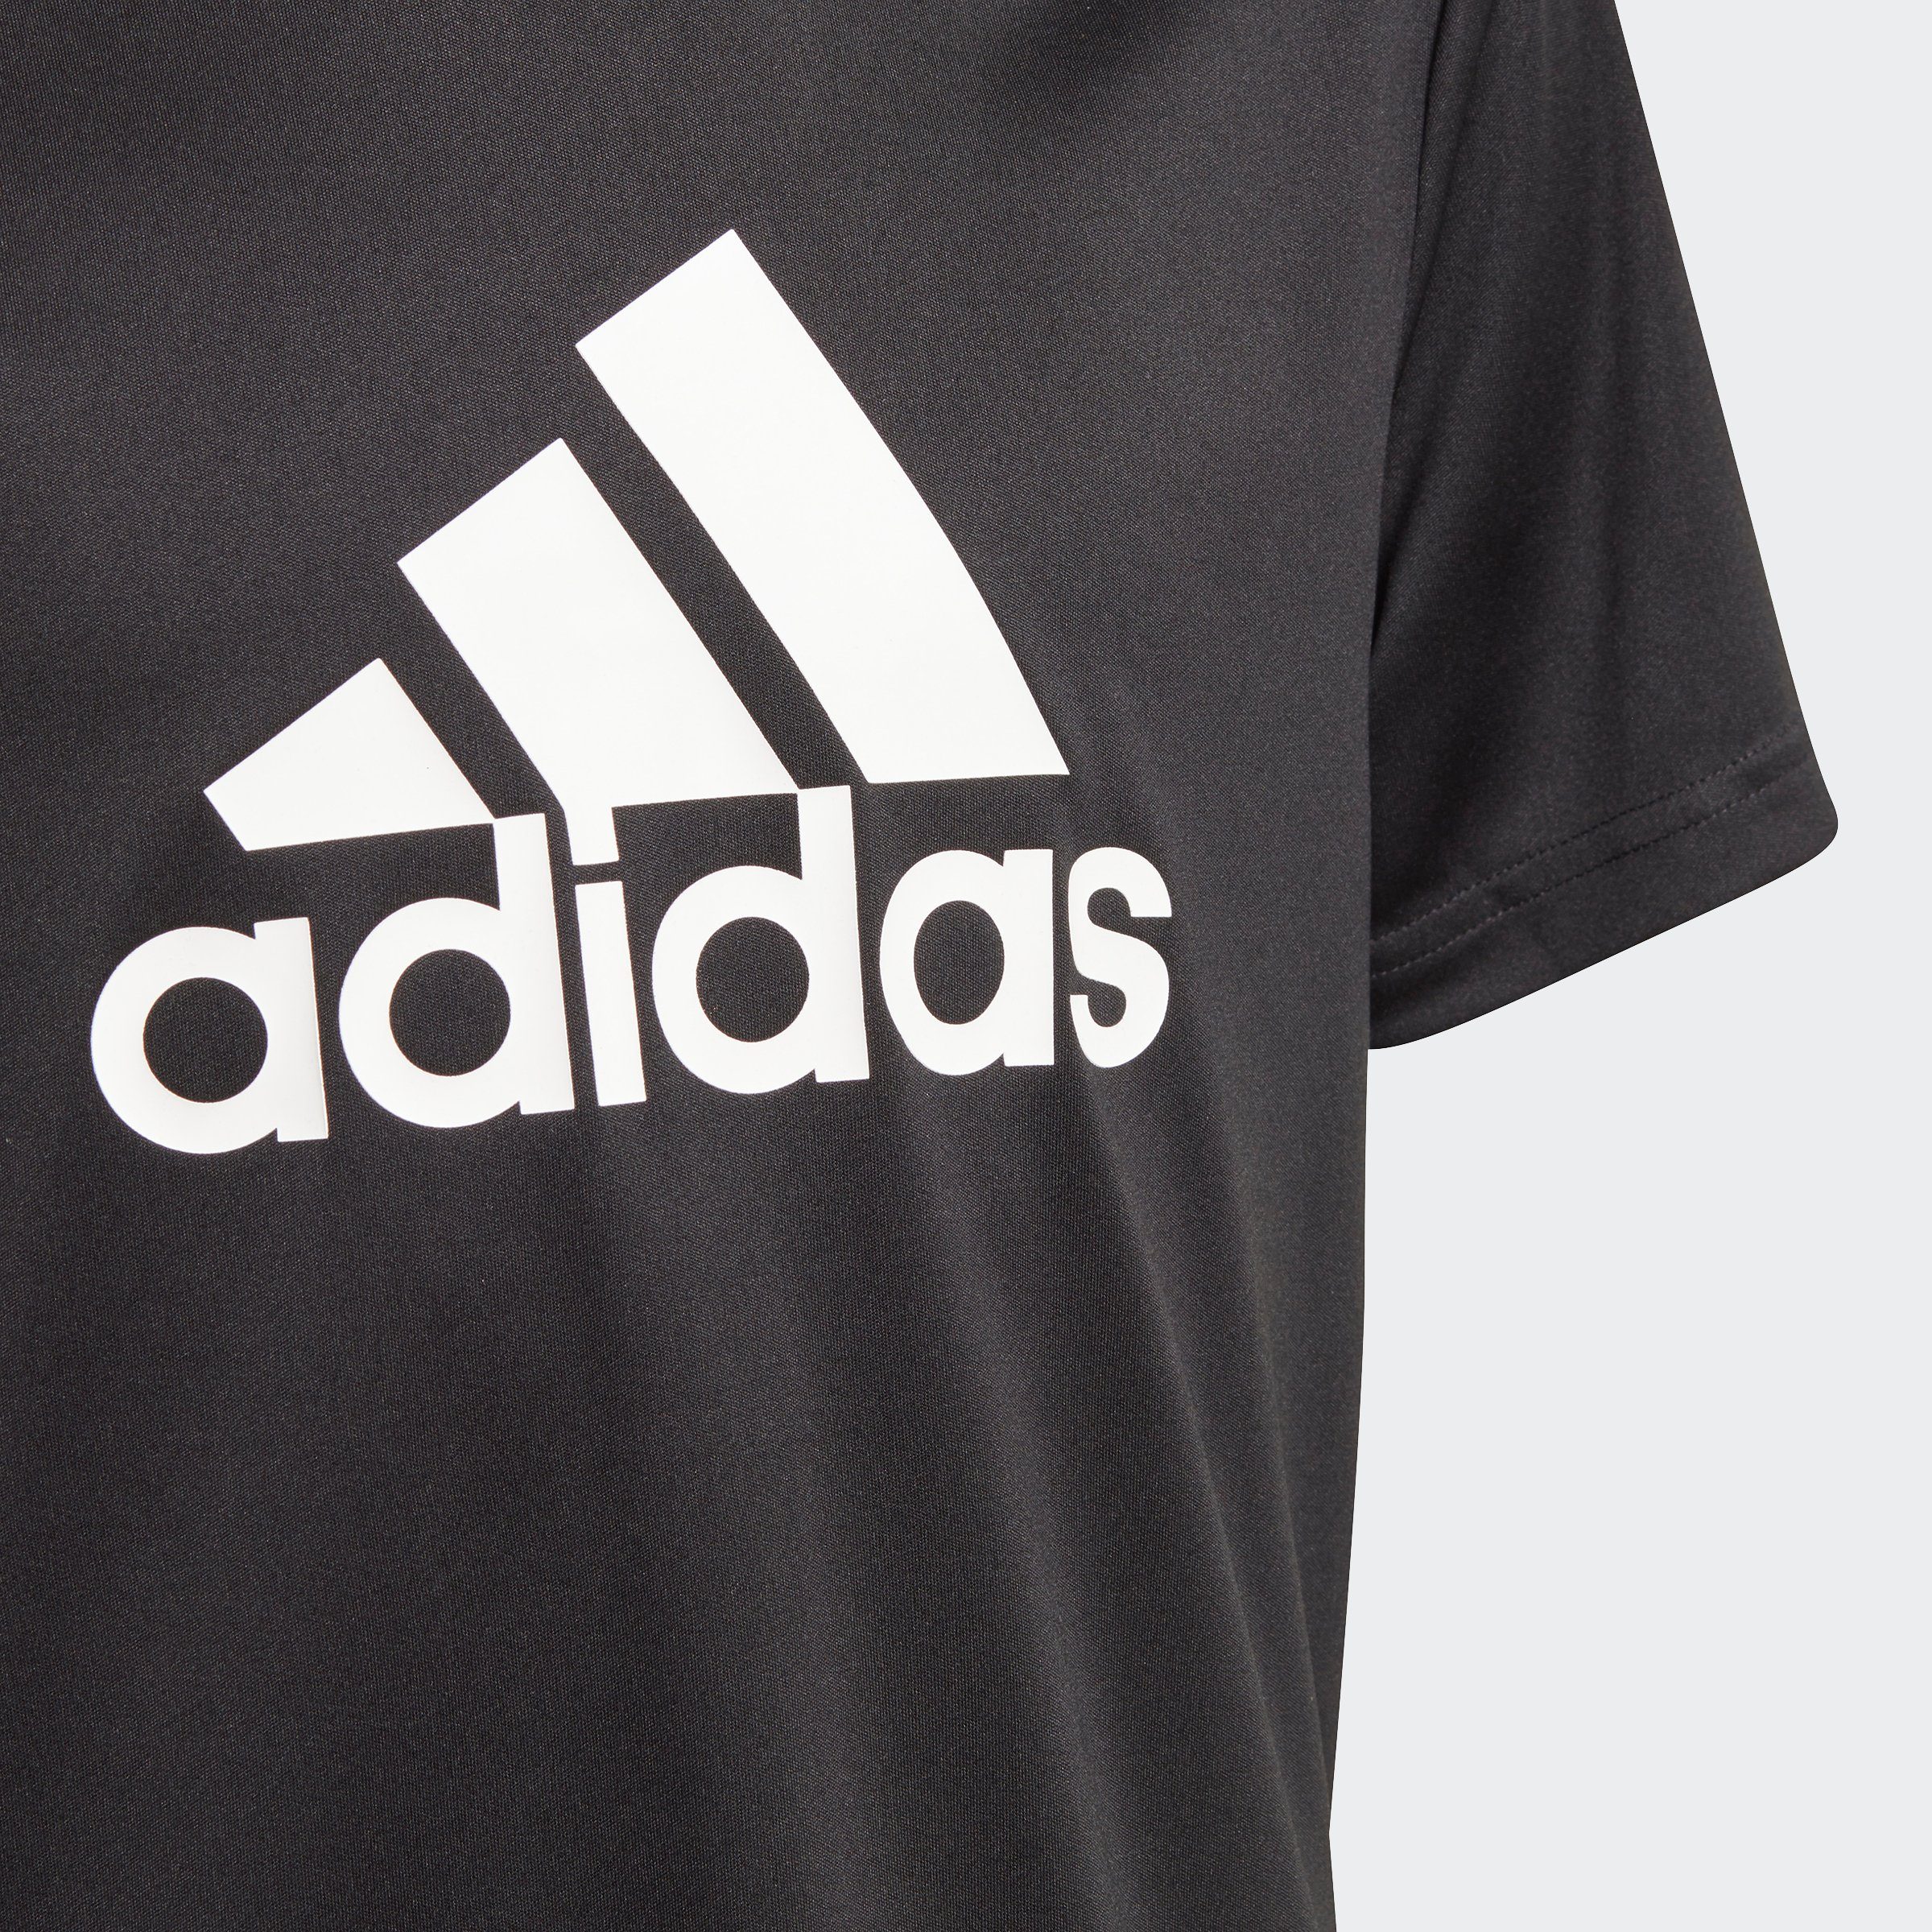 adidas Sportswear T-Shirt ADIDAS TO MOVE DESIGNED BLACK/WHITE BIG LOGO